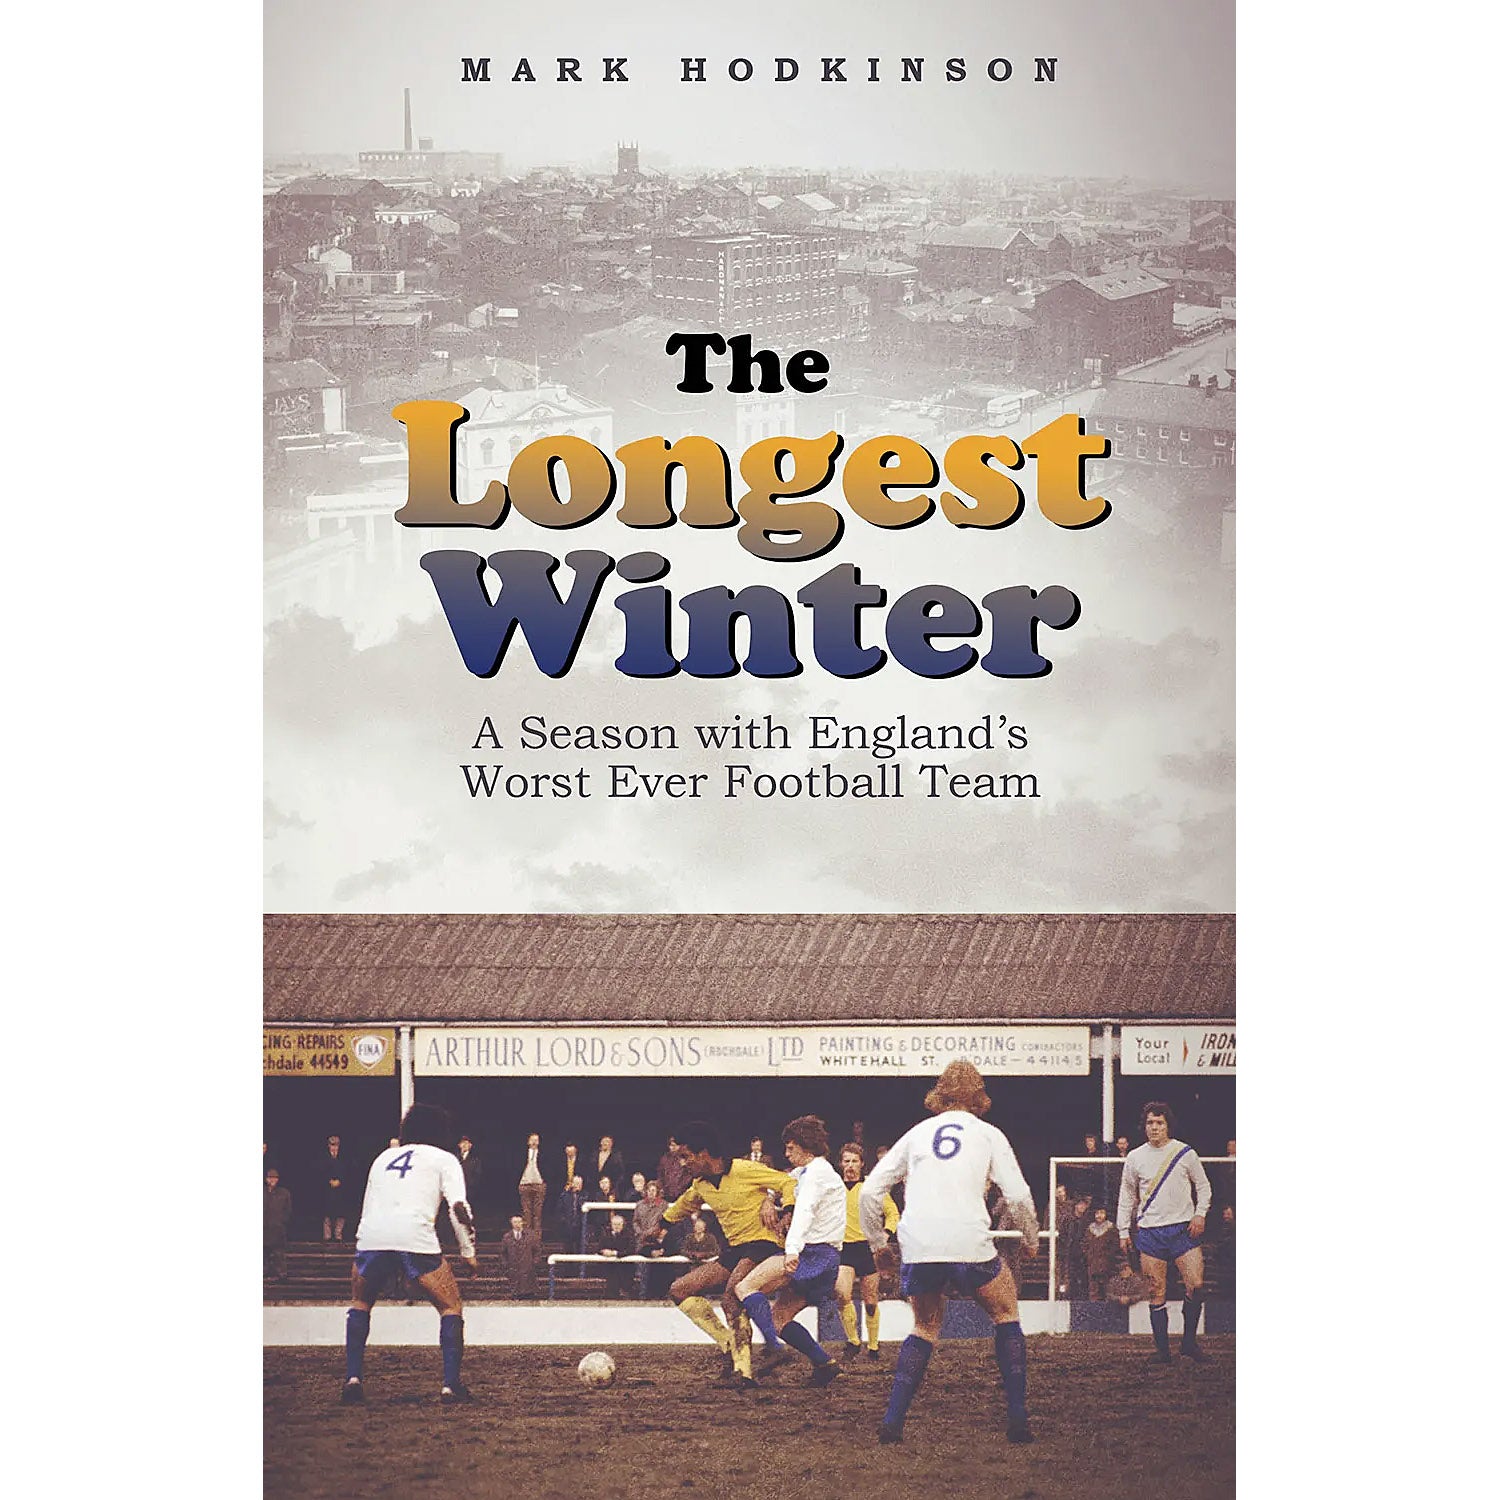 The Longest Winter – A Season with England's Worst Ever Football Team